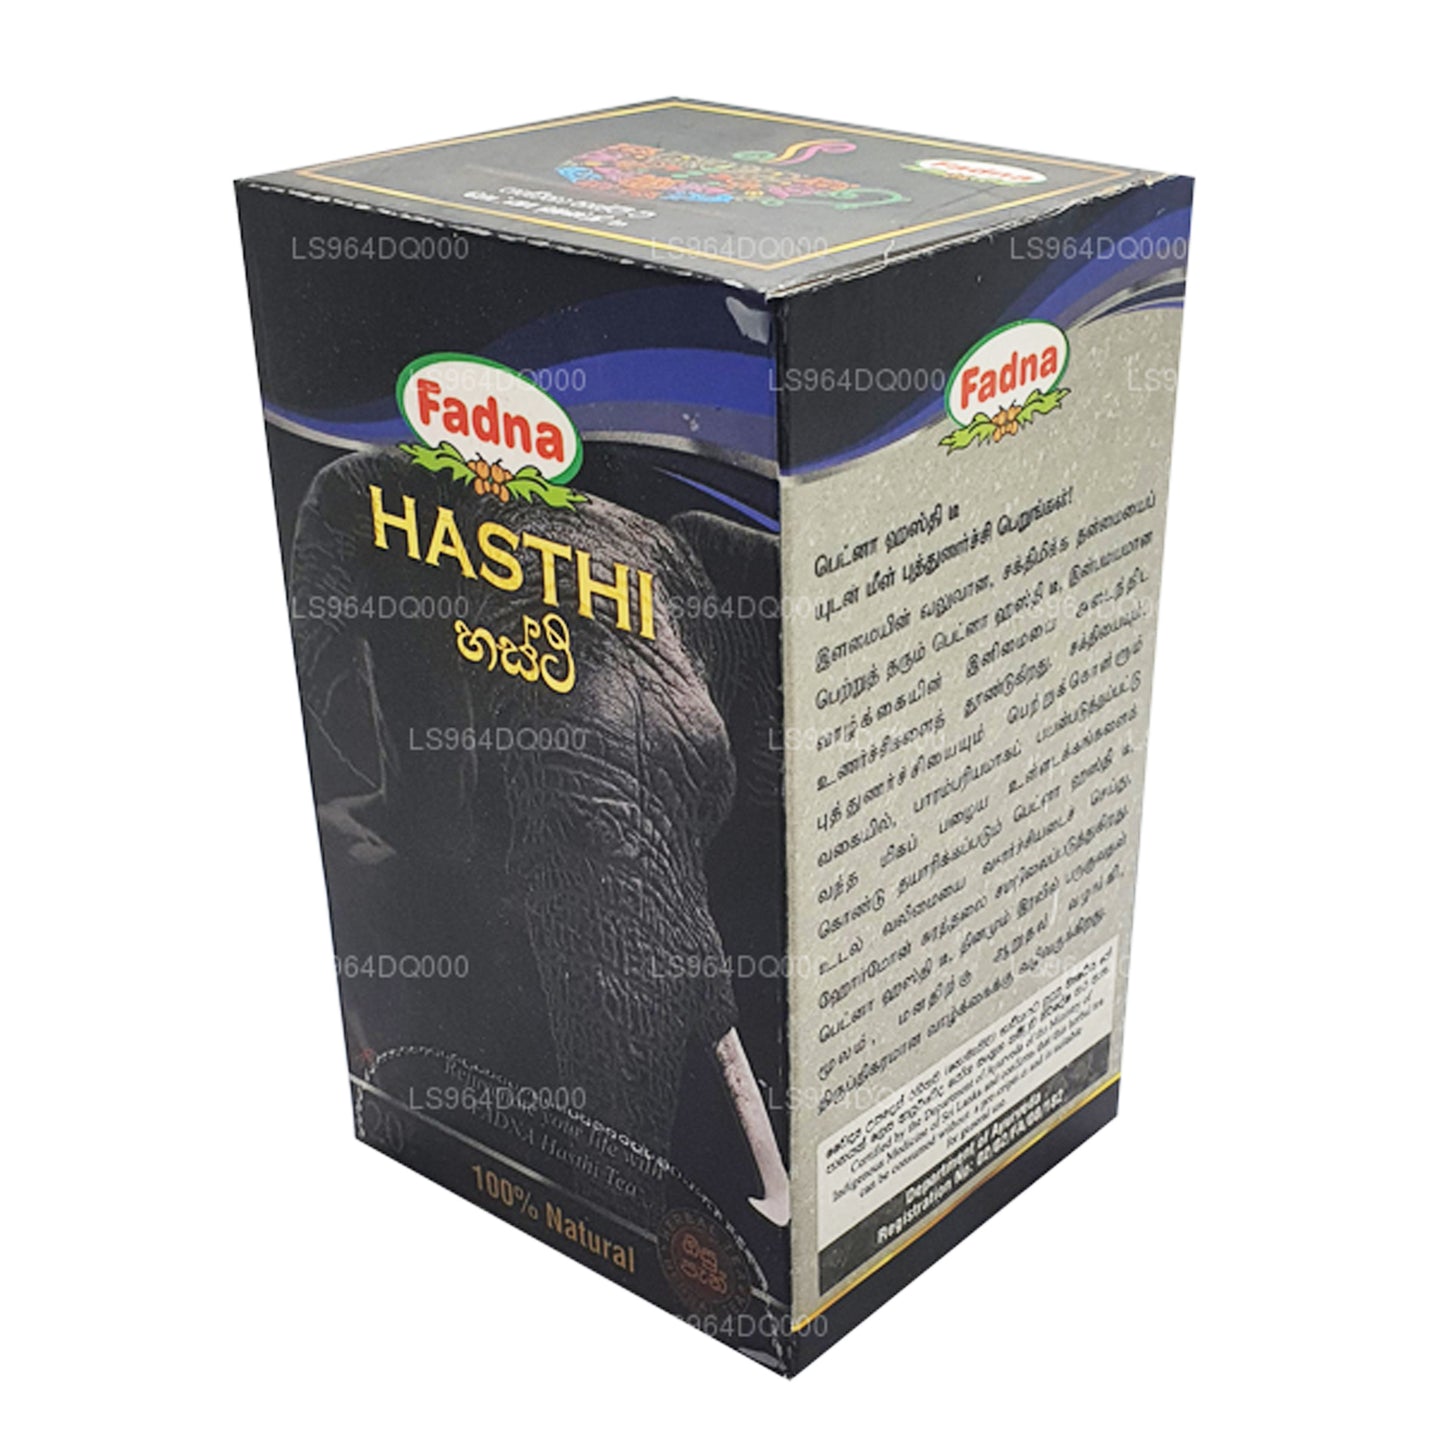 Fadna Hasthi Herbal Tea (40g) 20 Tea Bags